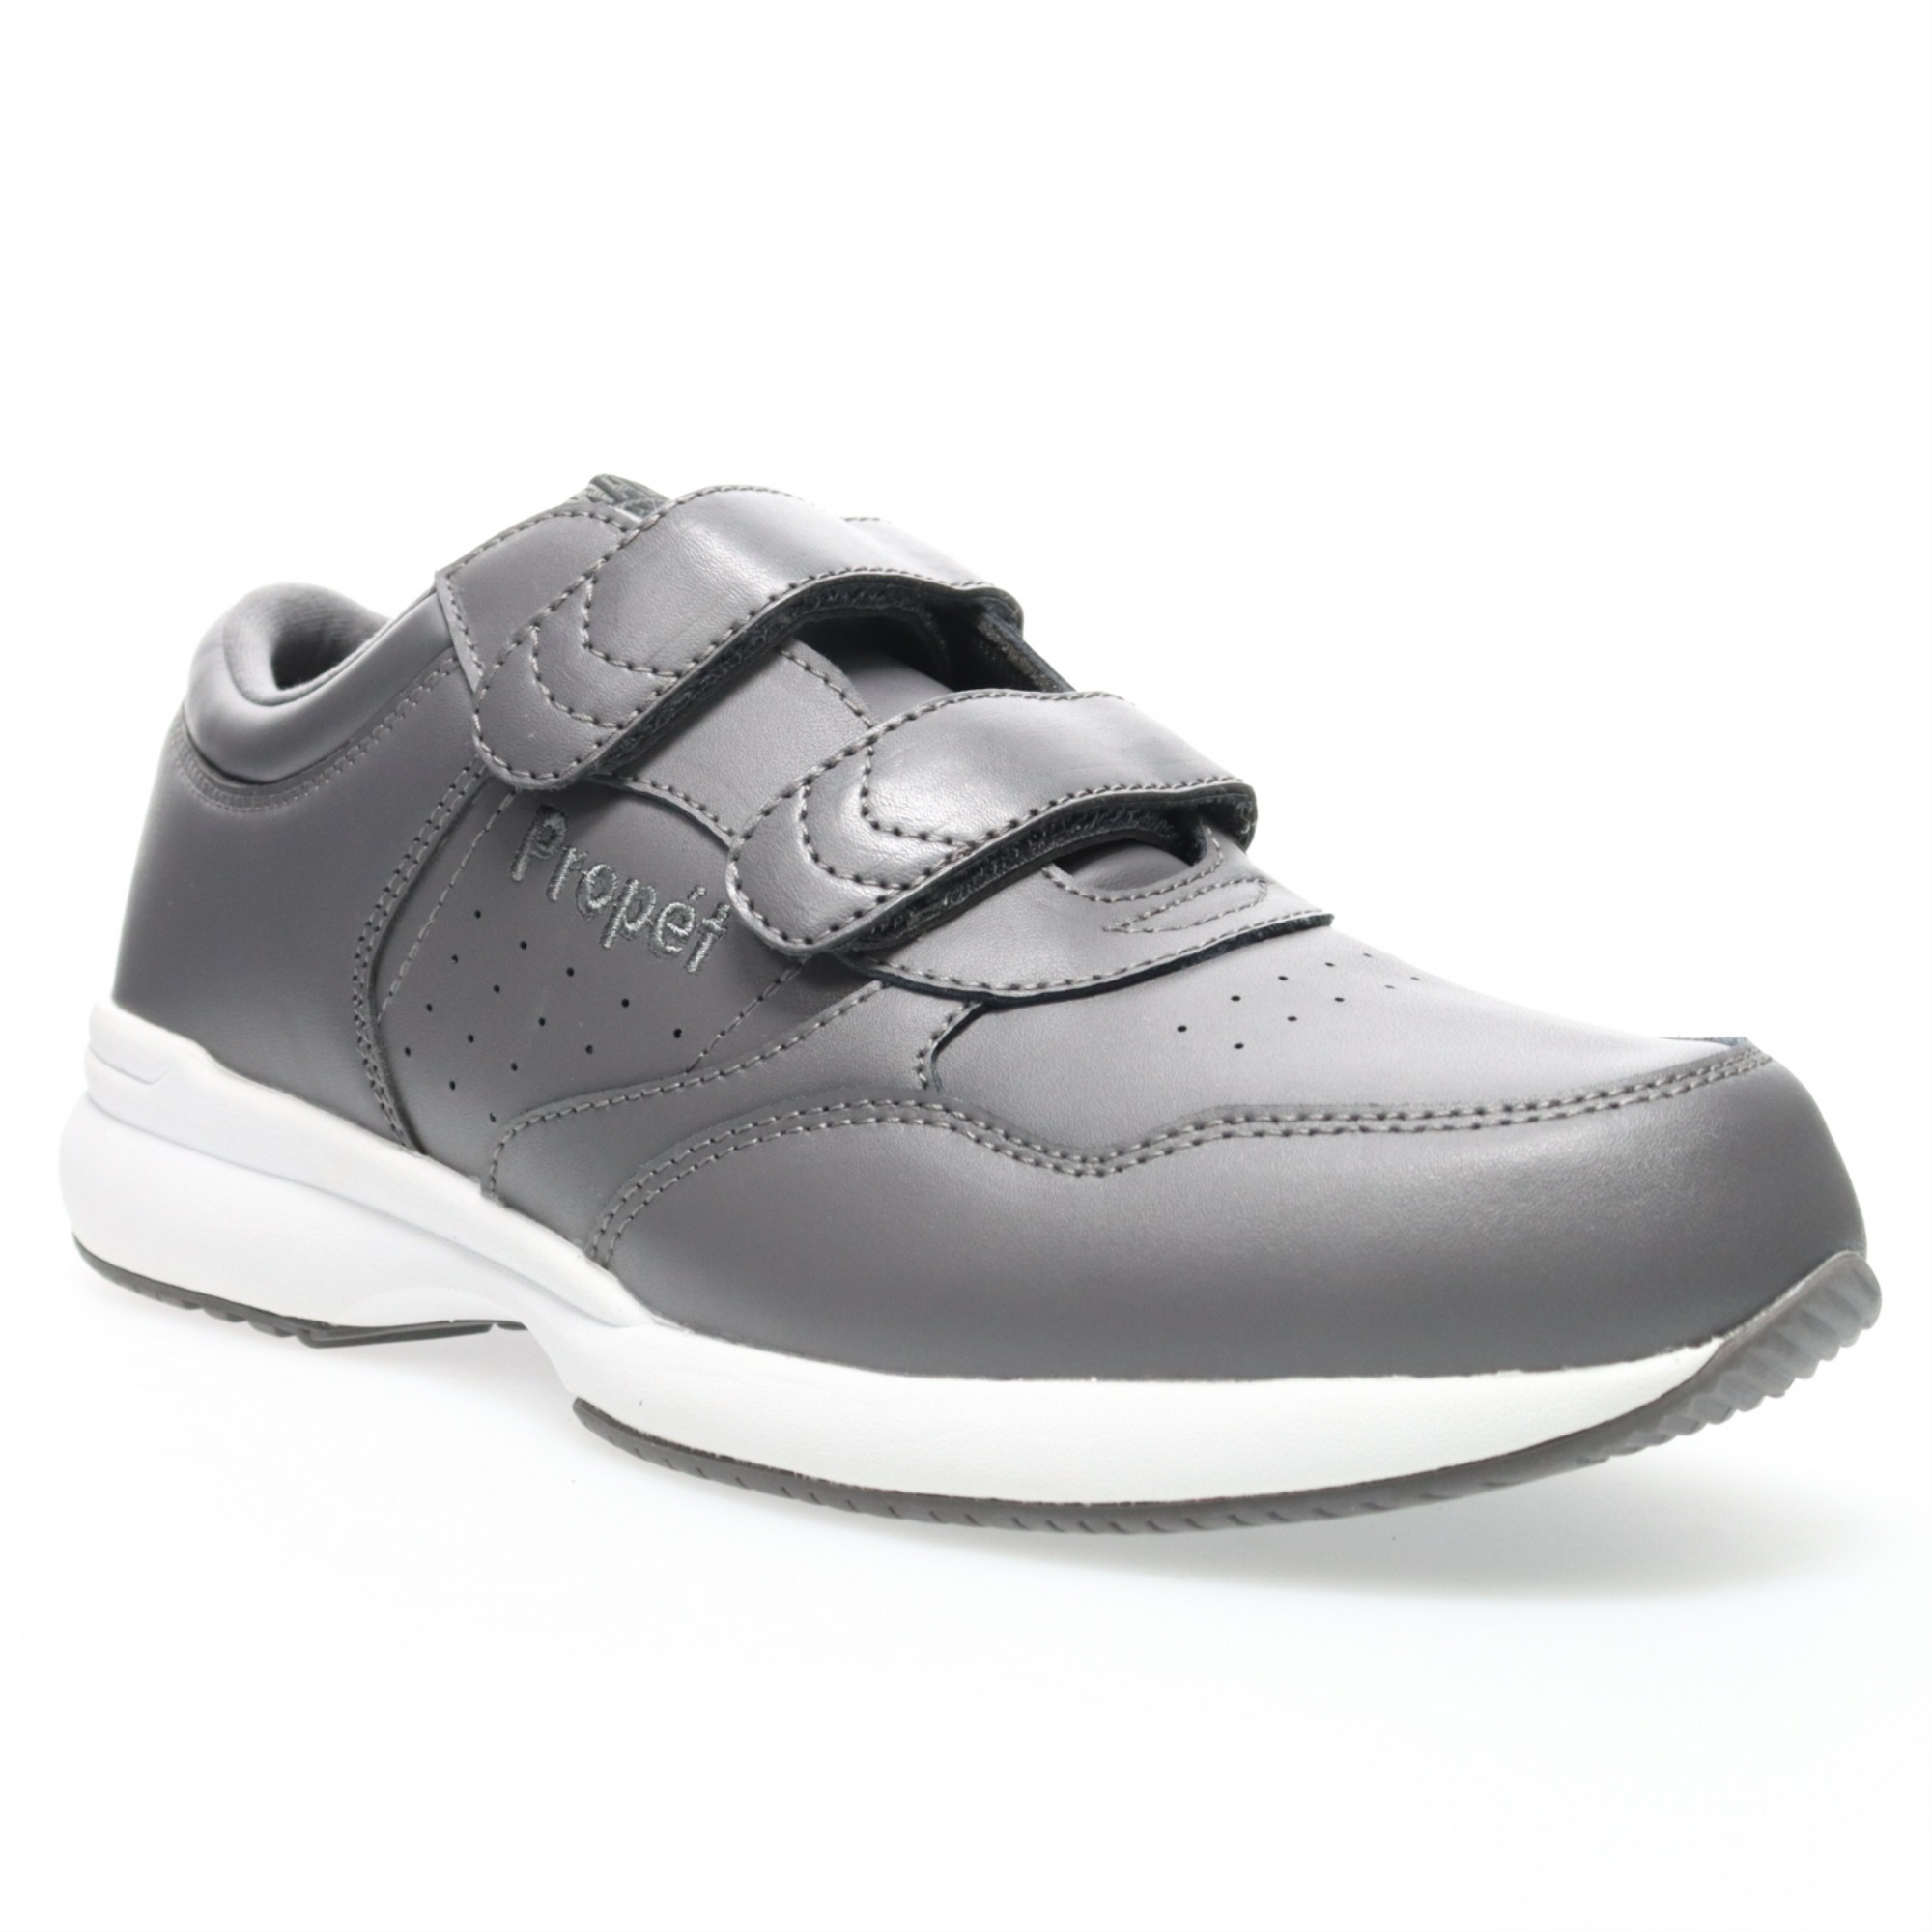 Propet Life Walker Strap Men's Sneakers - Dark Grey, Size 12 - image 1 of 5